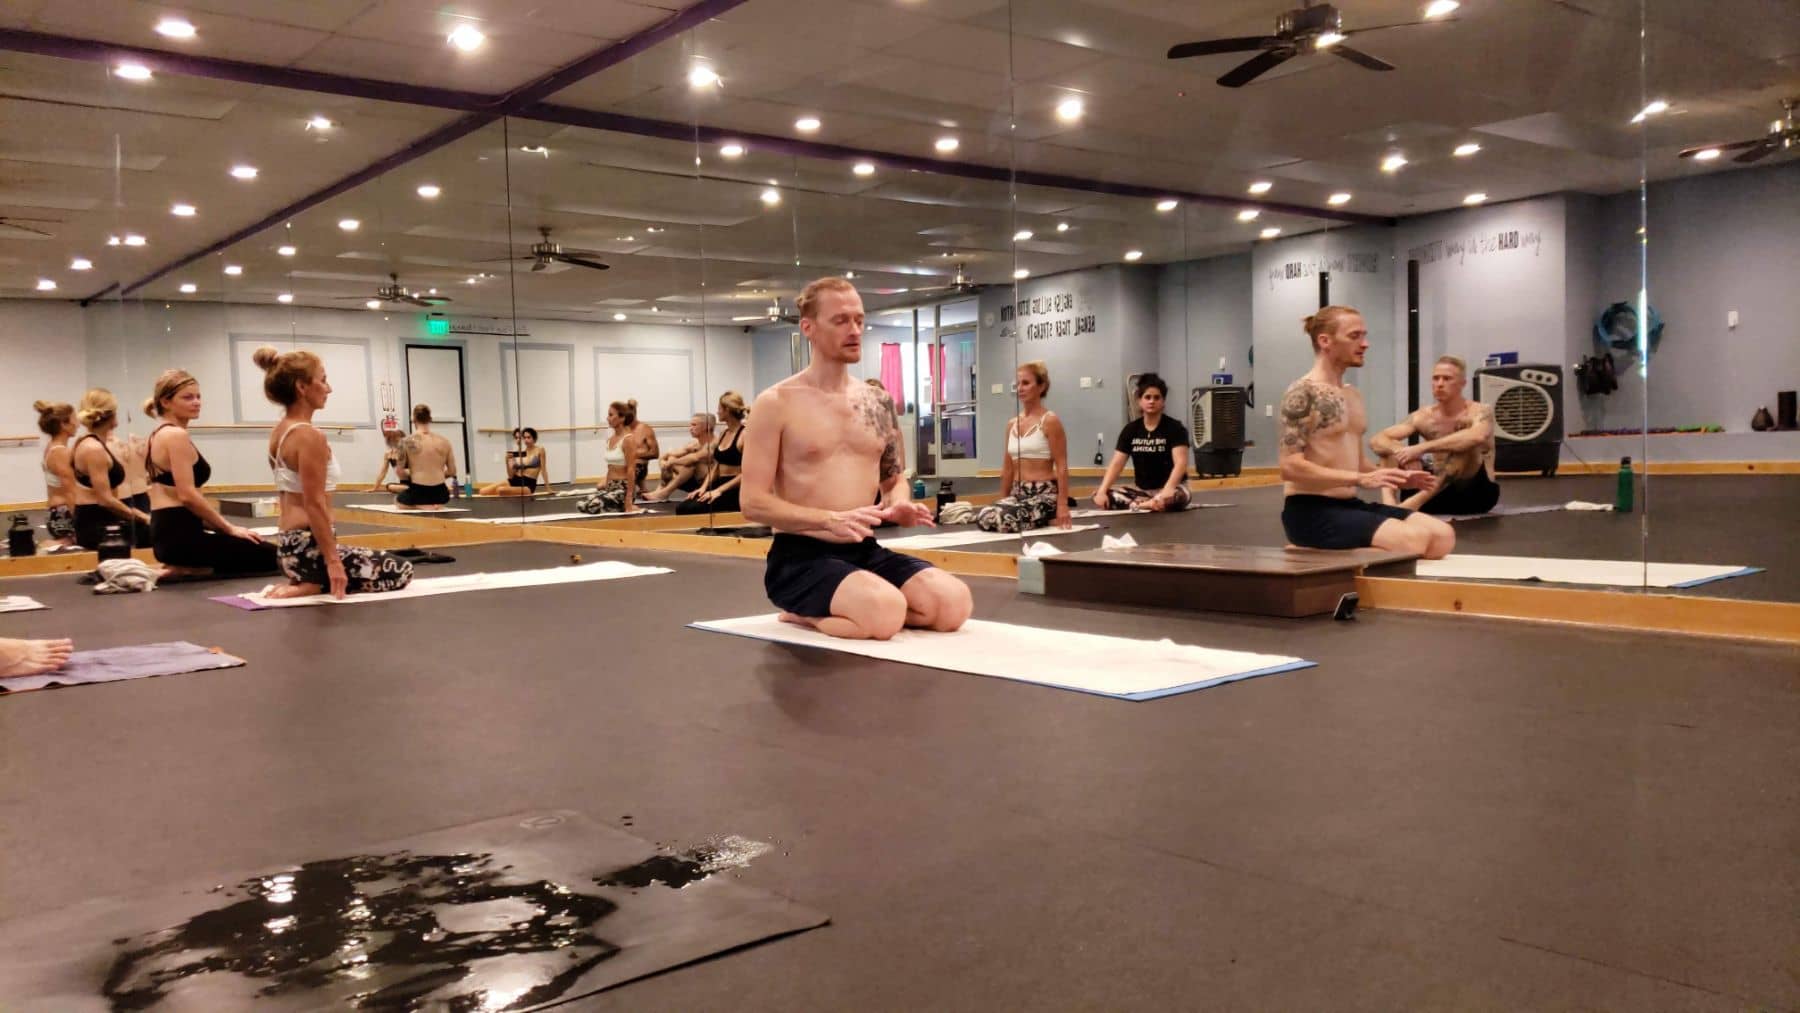 Yoga Room Etiquette - Hot For Yoga